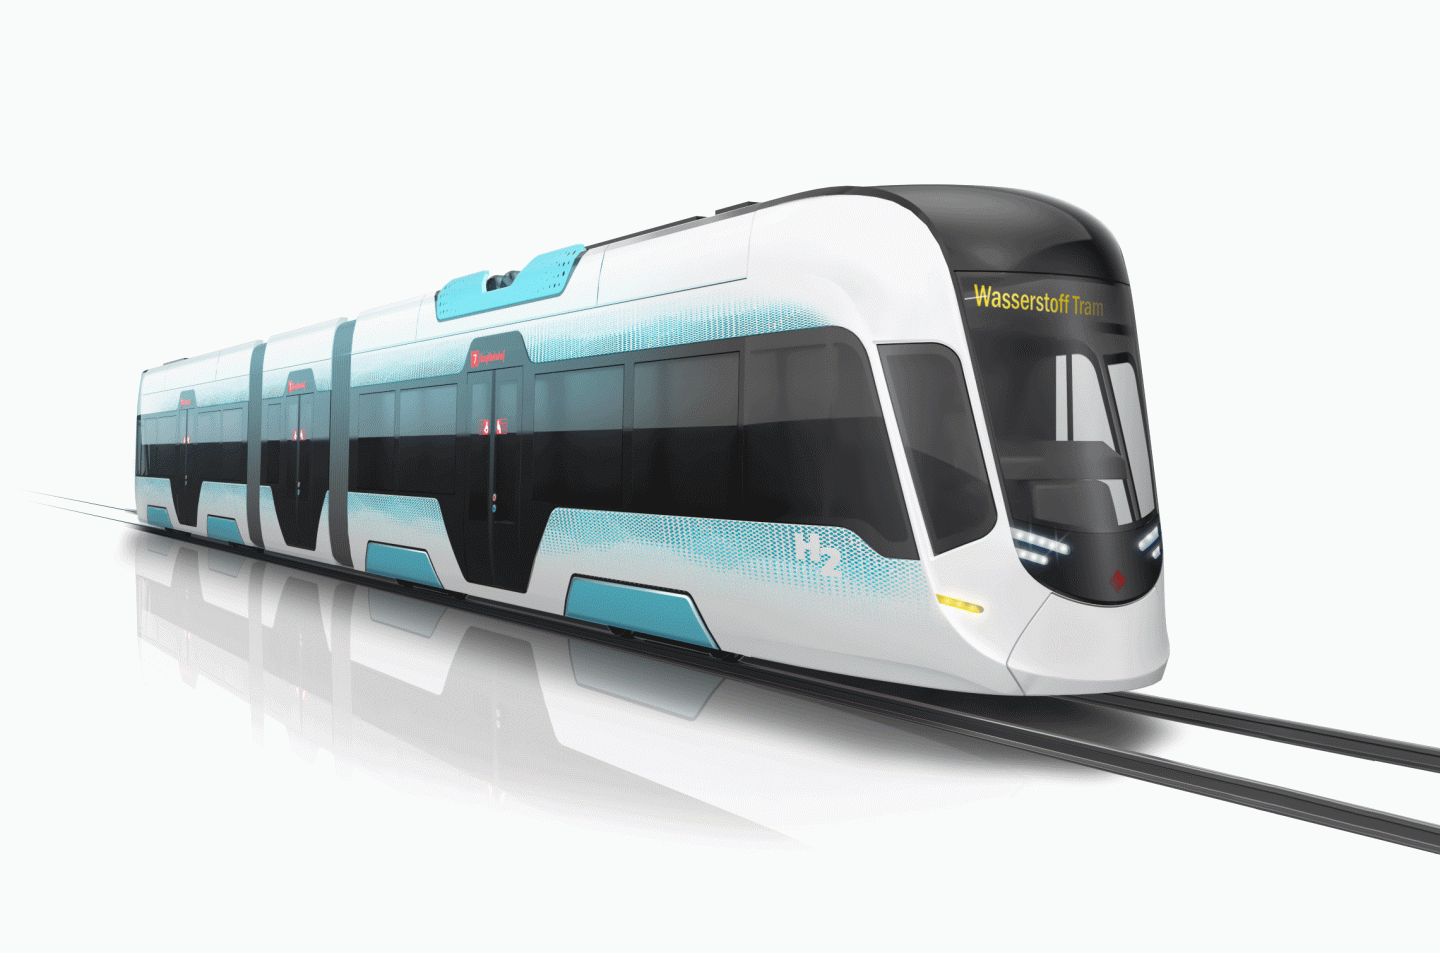 HÖRMANN Vehicle Engineering_Innovation_H2 Tram